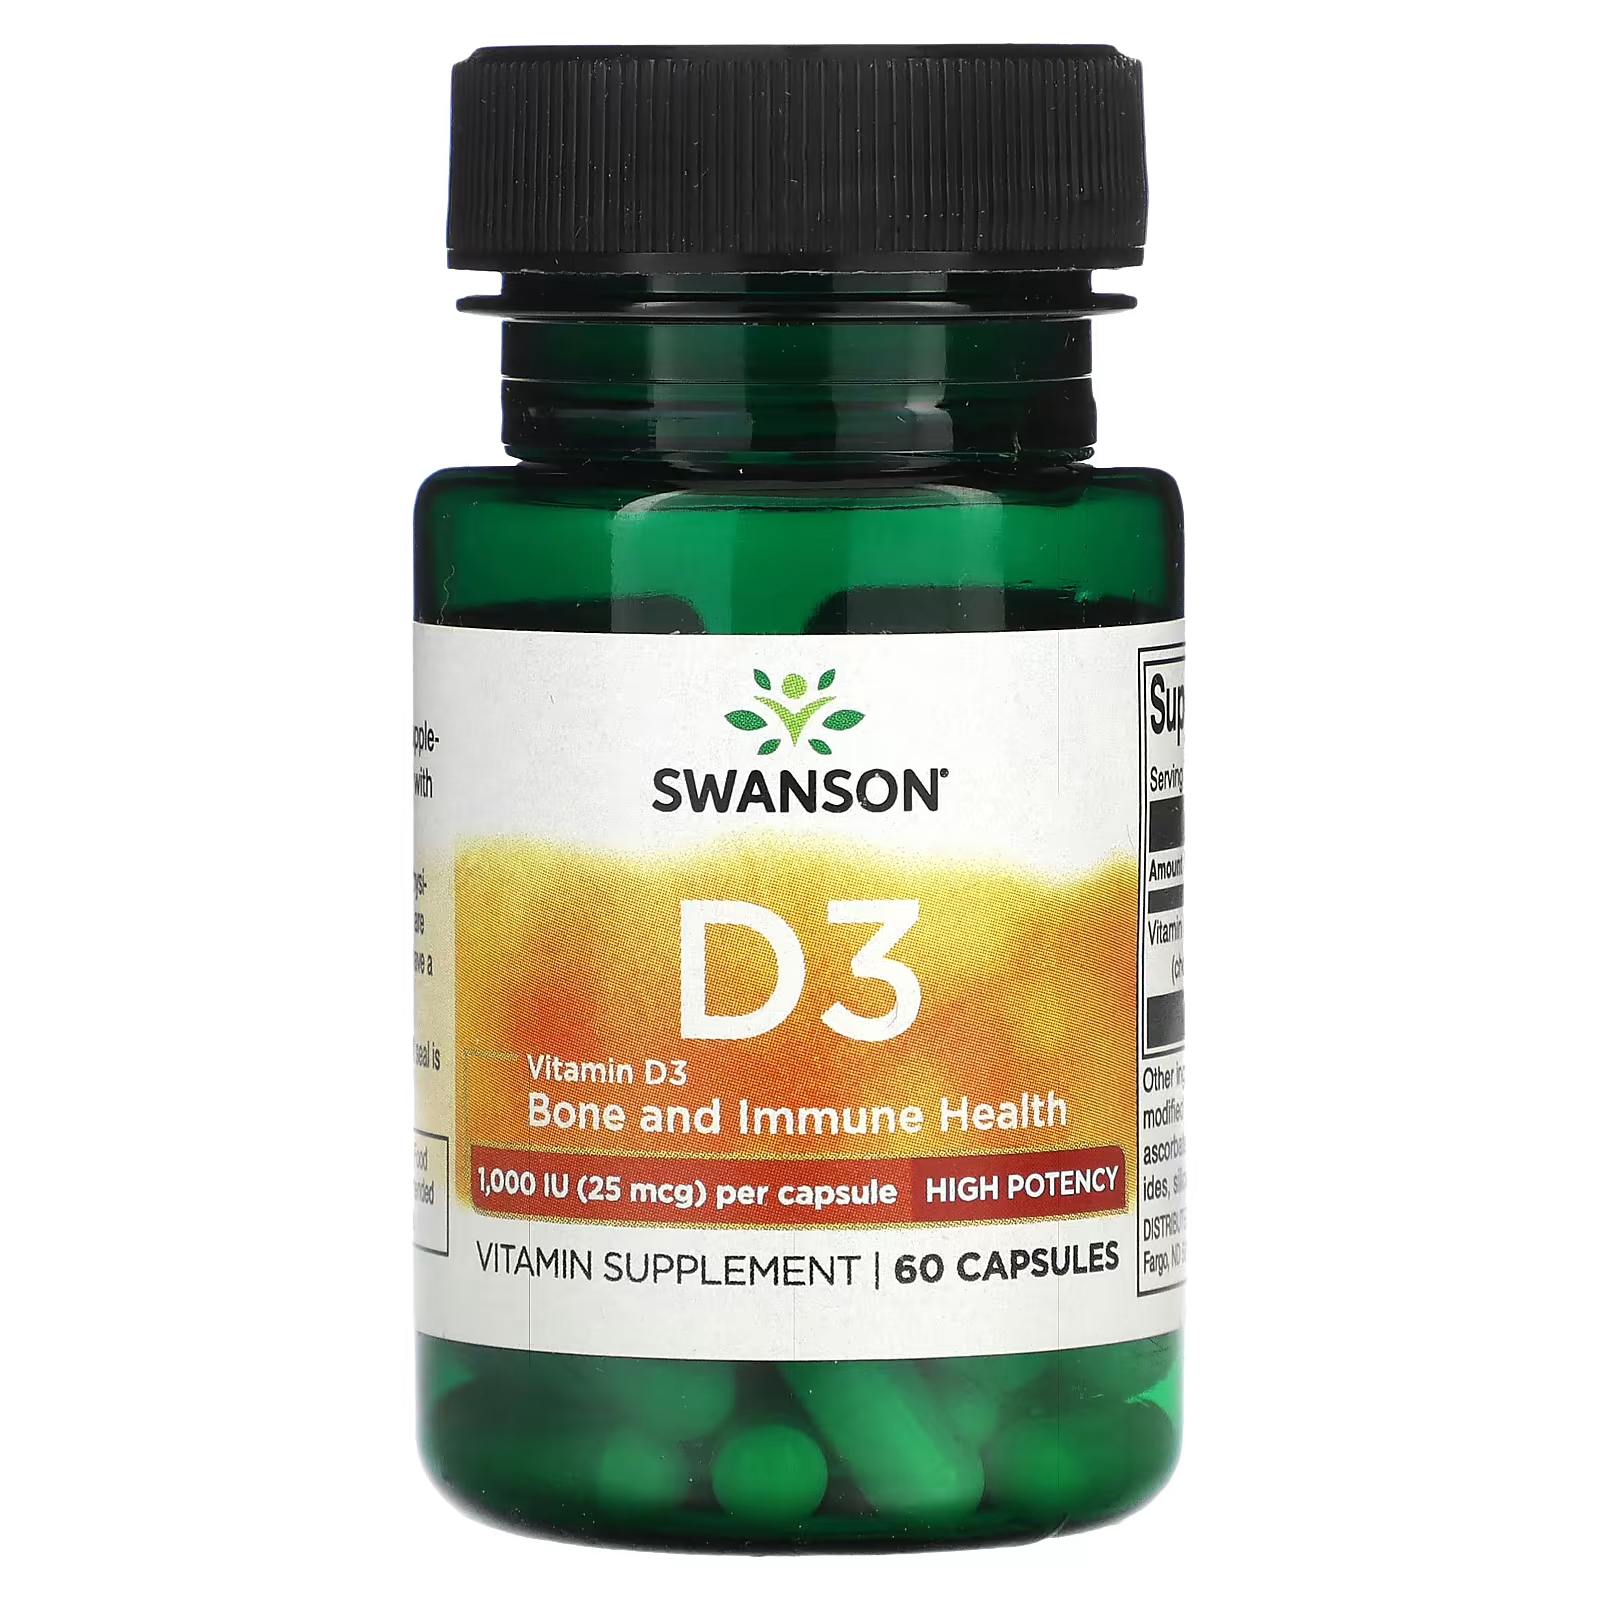 цена Витамин D3 Swanson высокой эффективности, 60 капсул